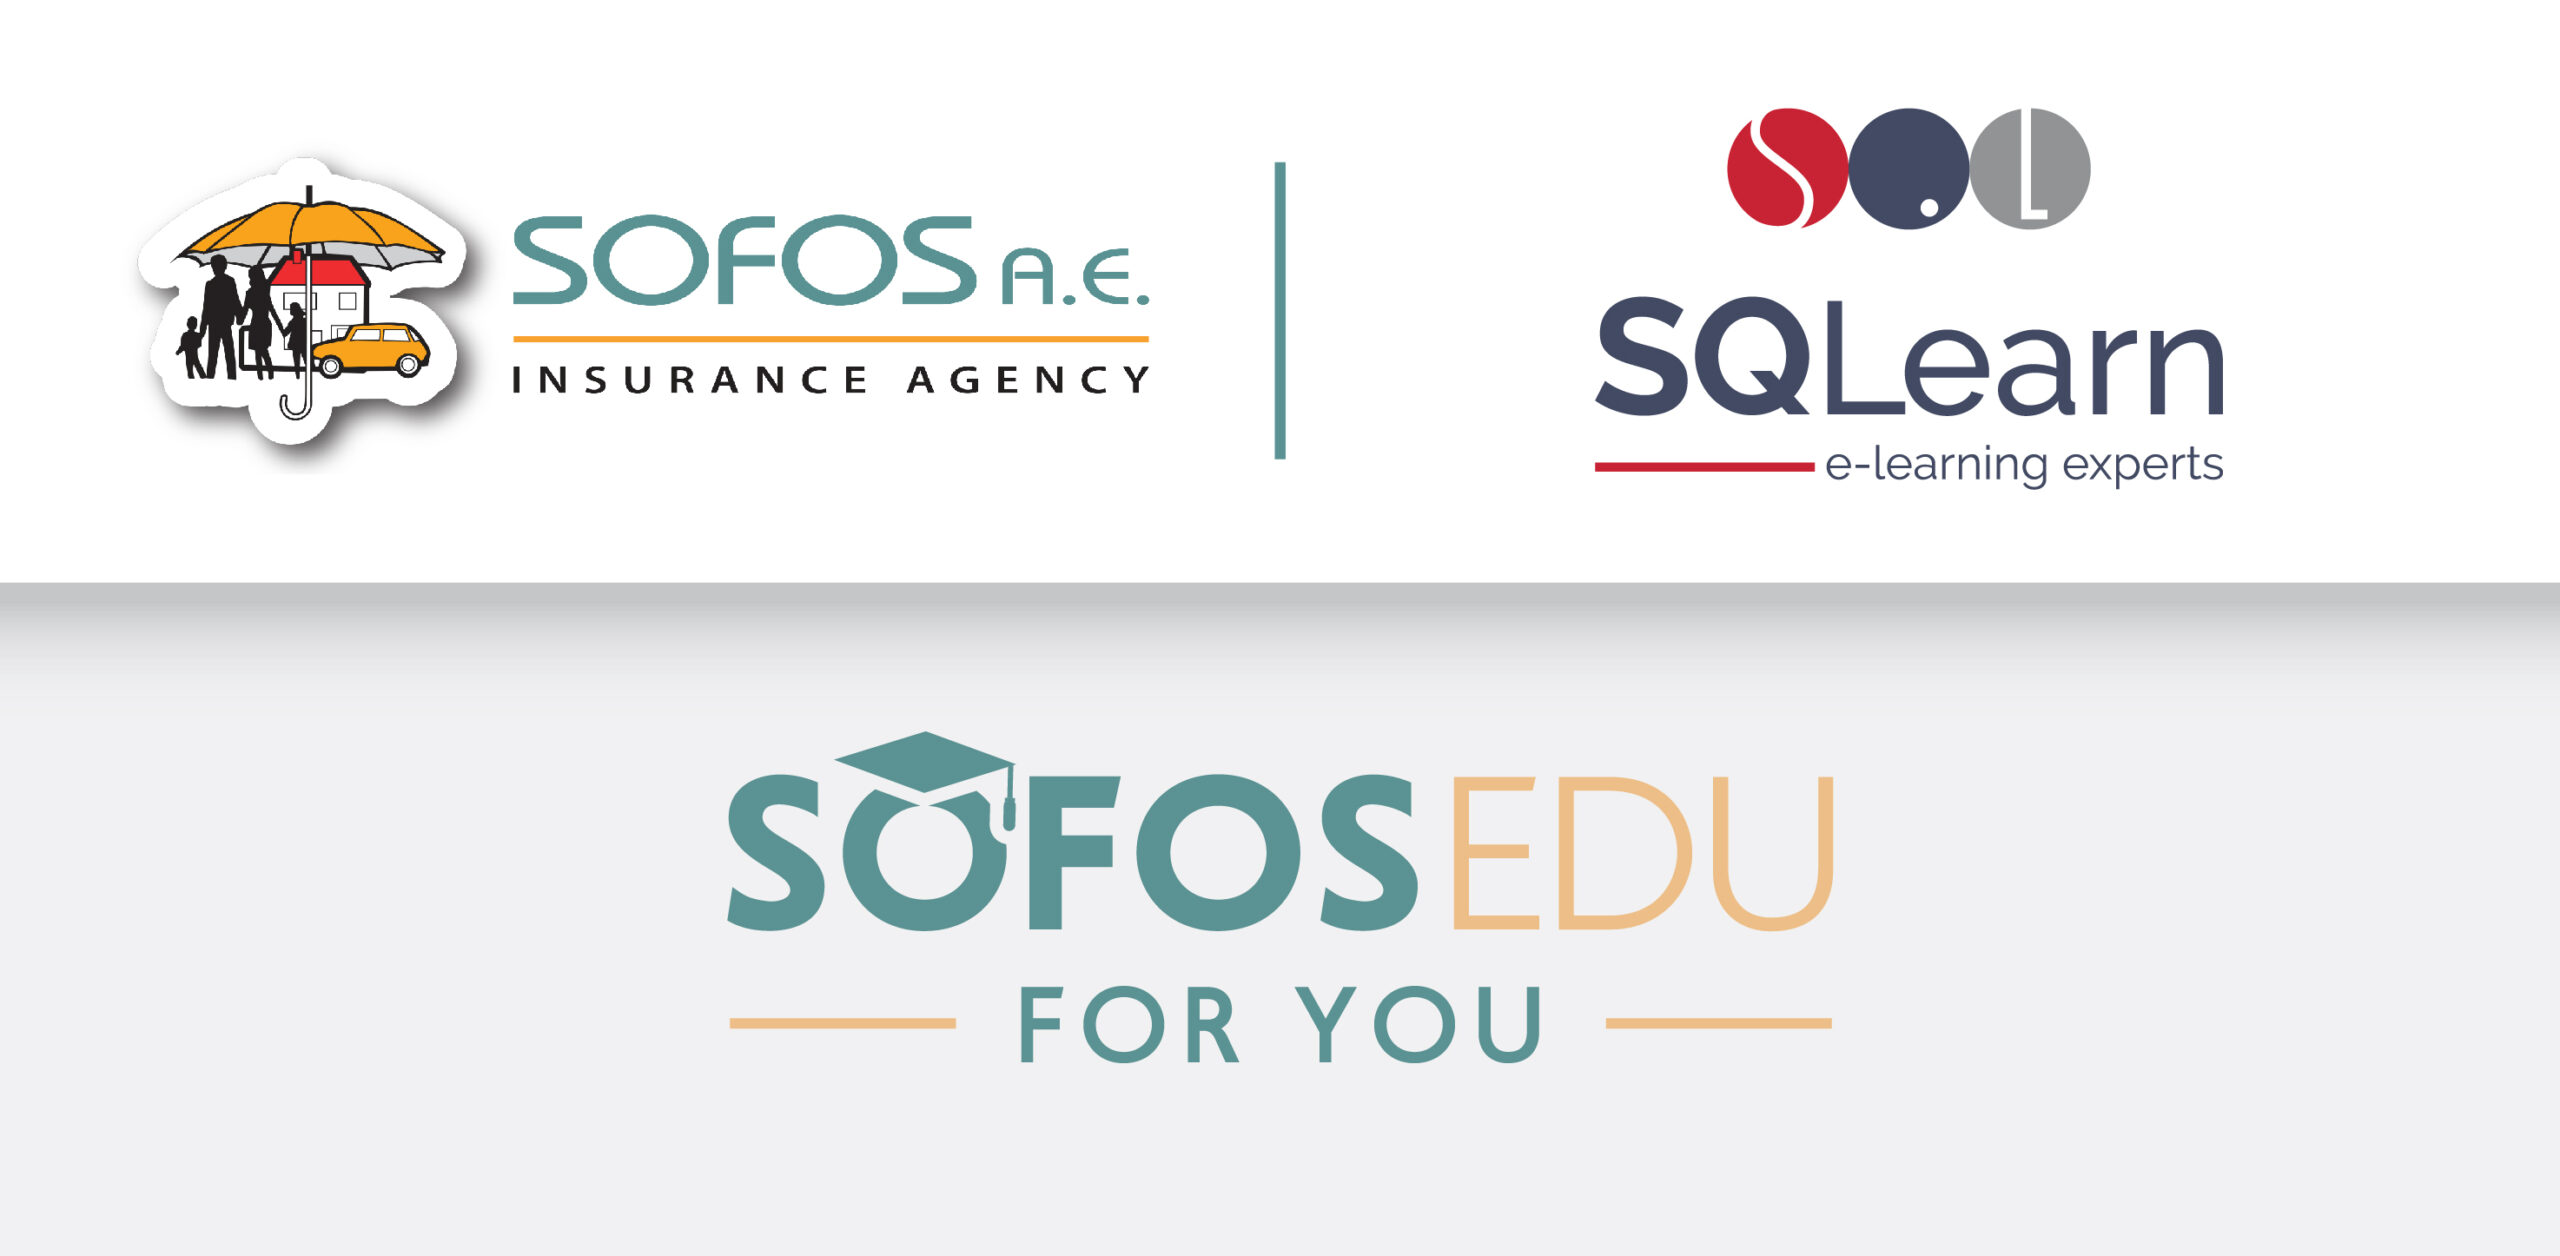 Sofos - SQLearn: Δημιουργούν την πρώτη πλατφόρμα επαναπιστοποίησης